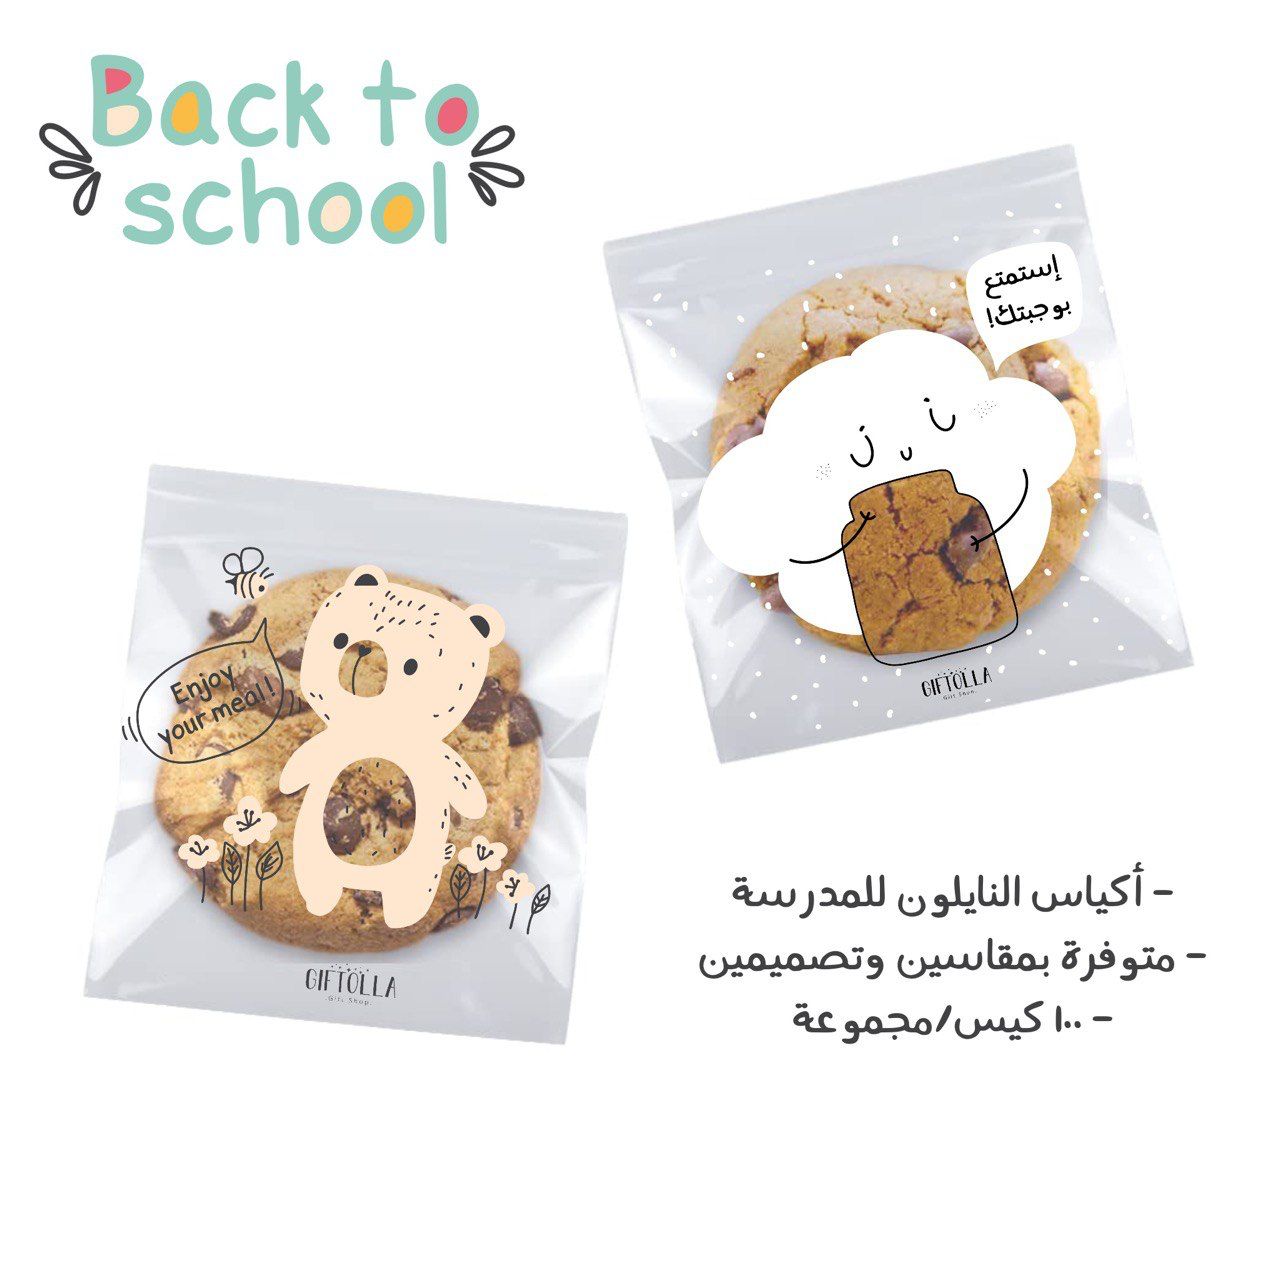 School sweets cellophane bags - 4 packs